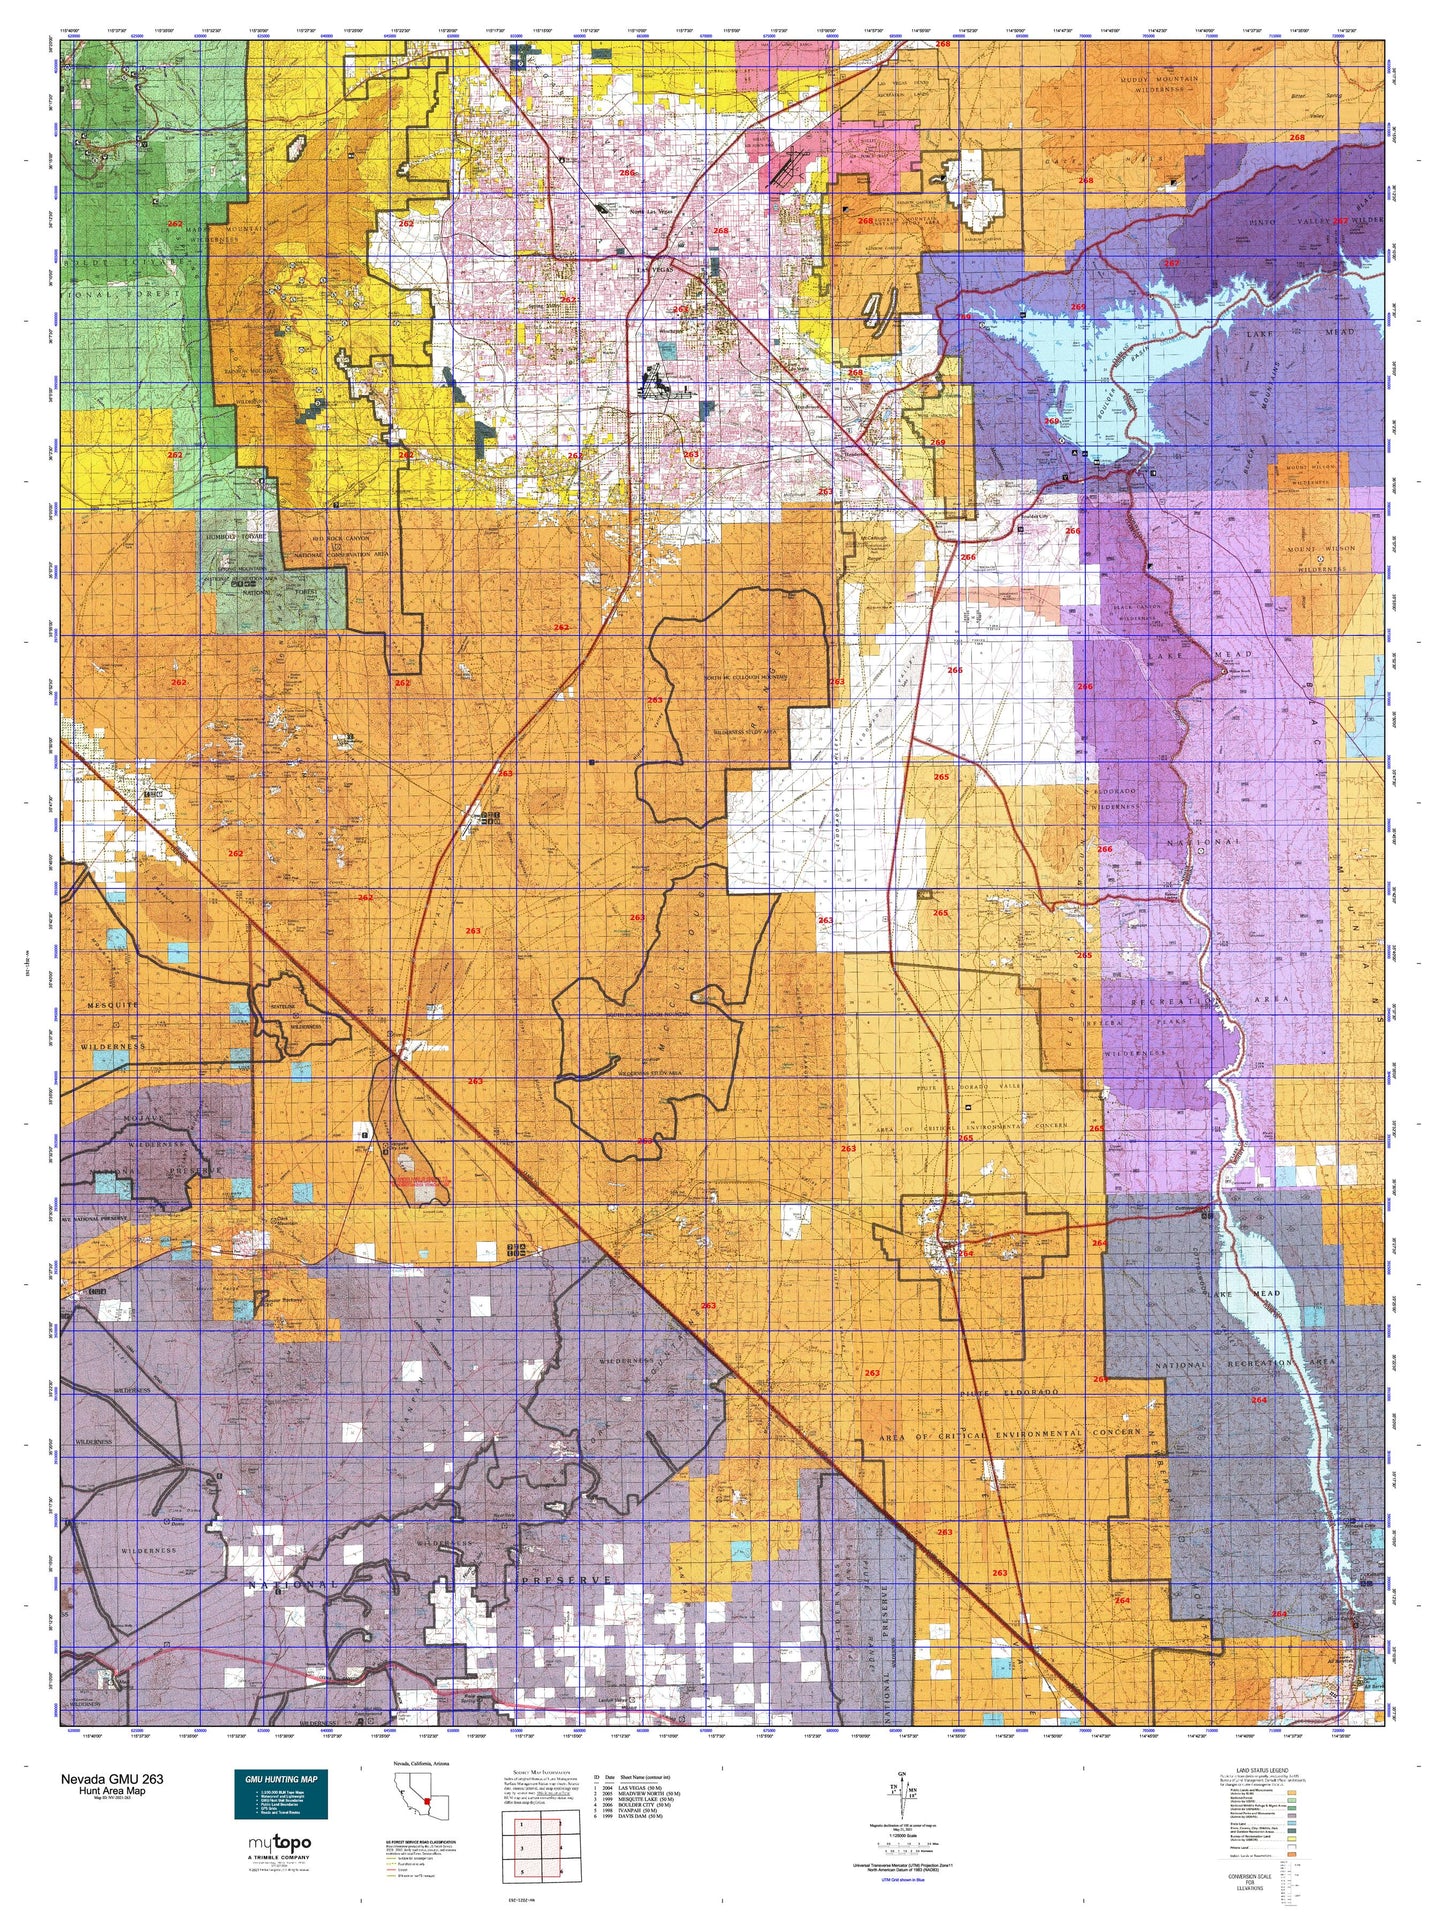 Nevada GMU 263 Map Image